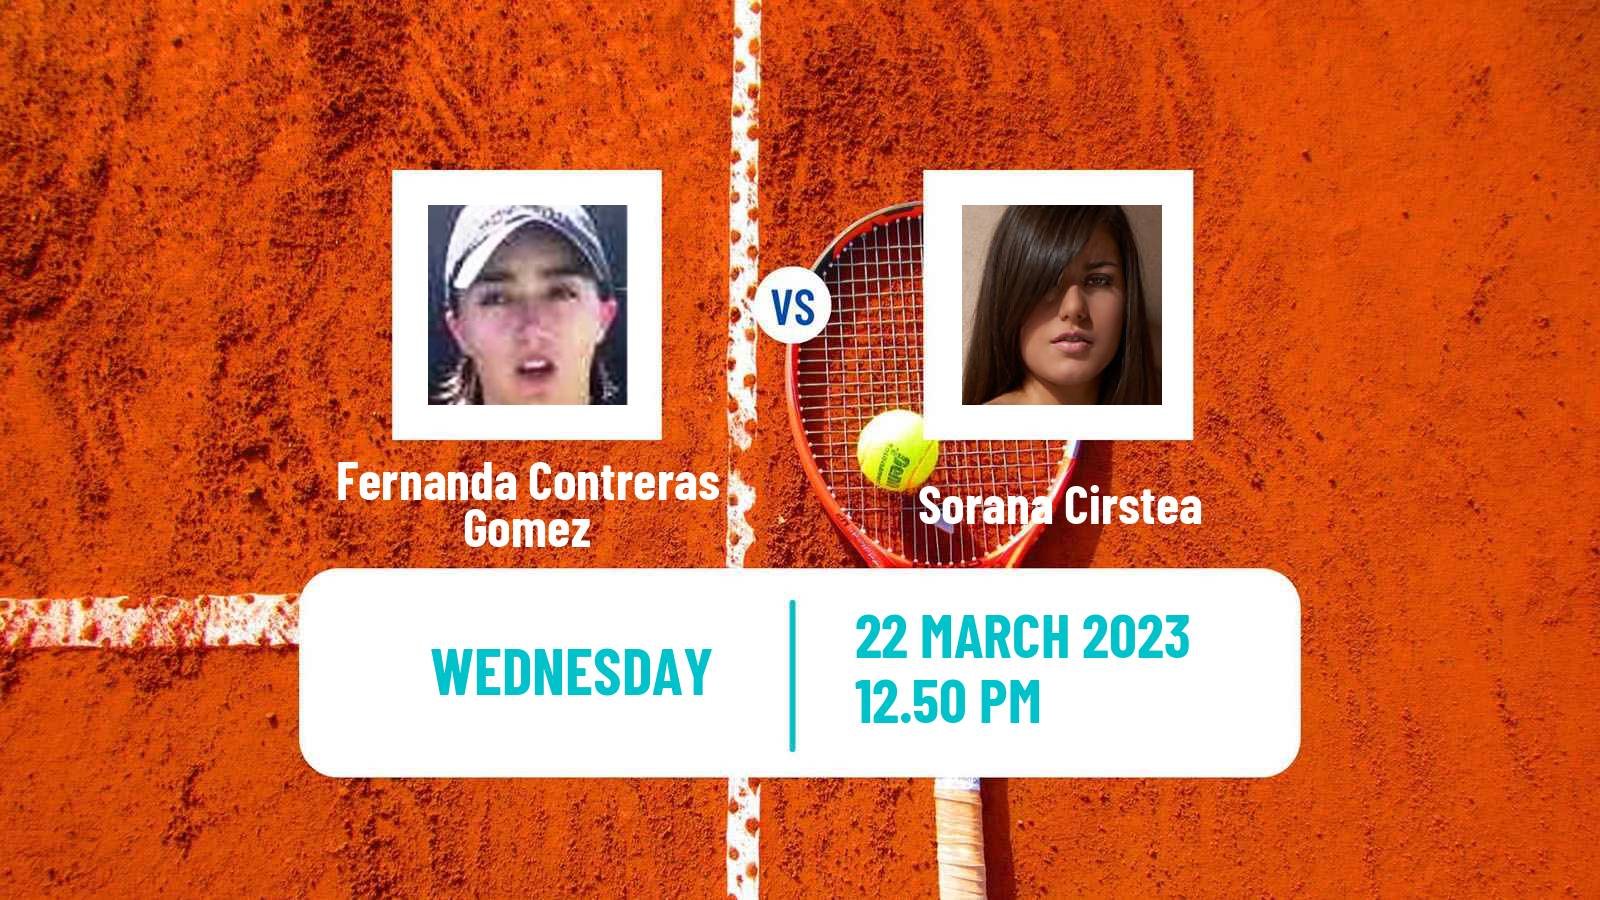 Tennis WTA Miami Fernanda Contreras Gomez - Sorana Cirstea